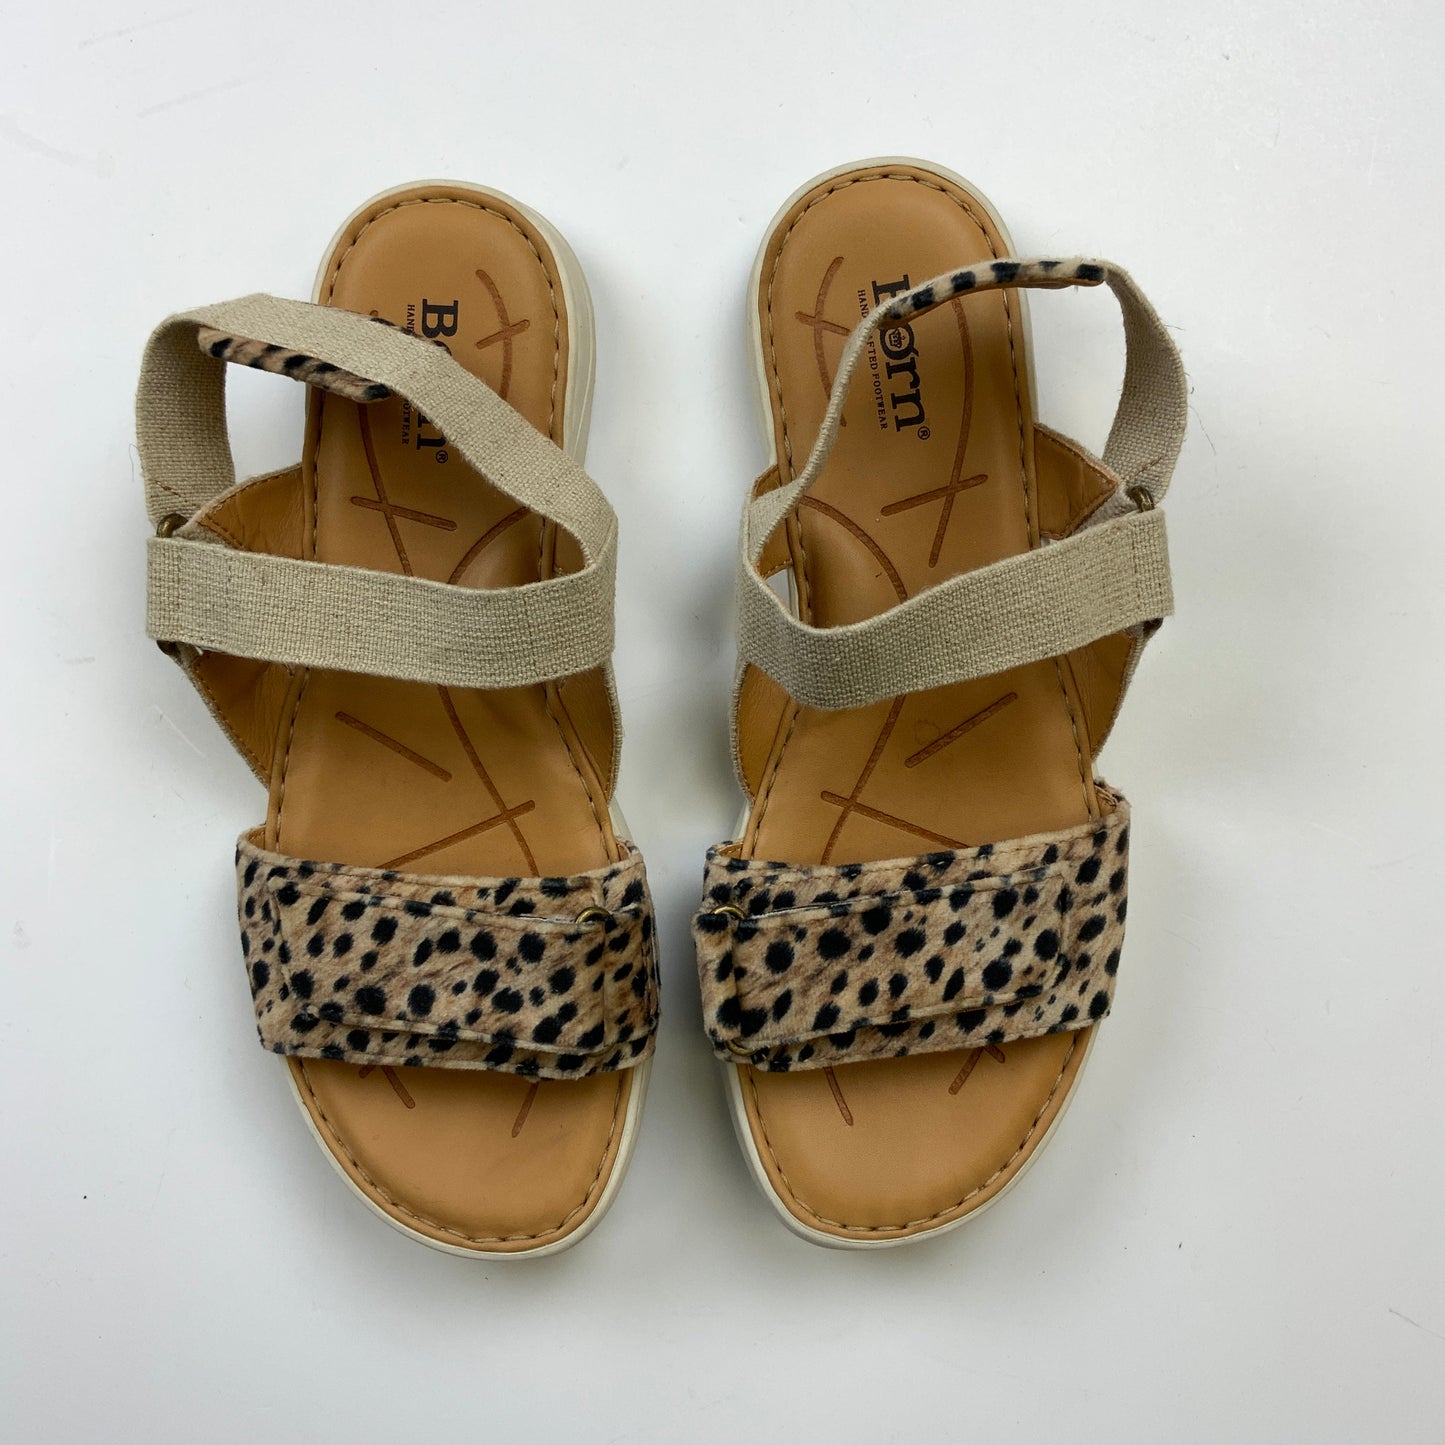 Black & Tan Sandals Flats Born, Size 8